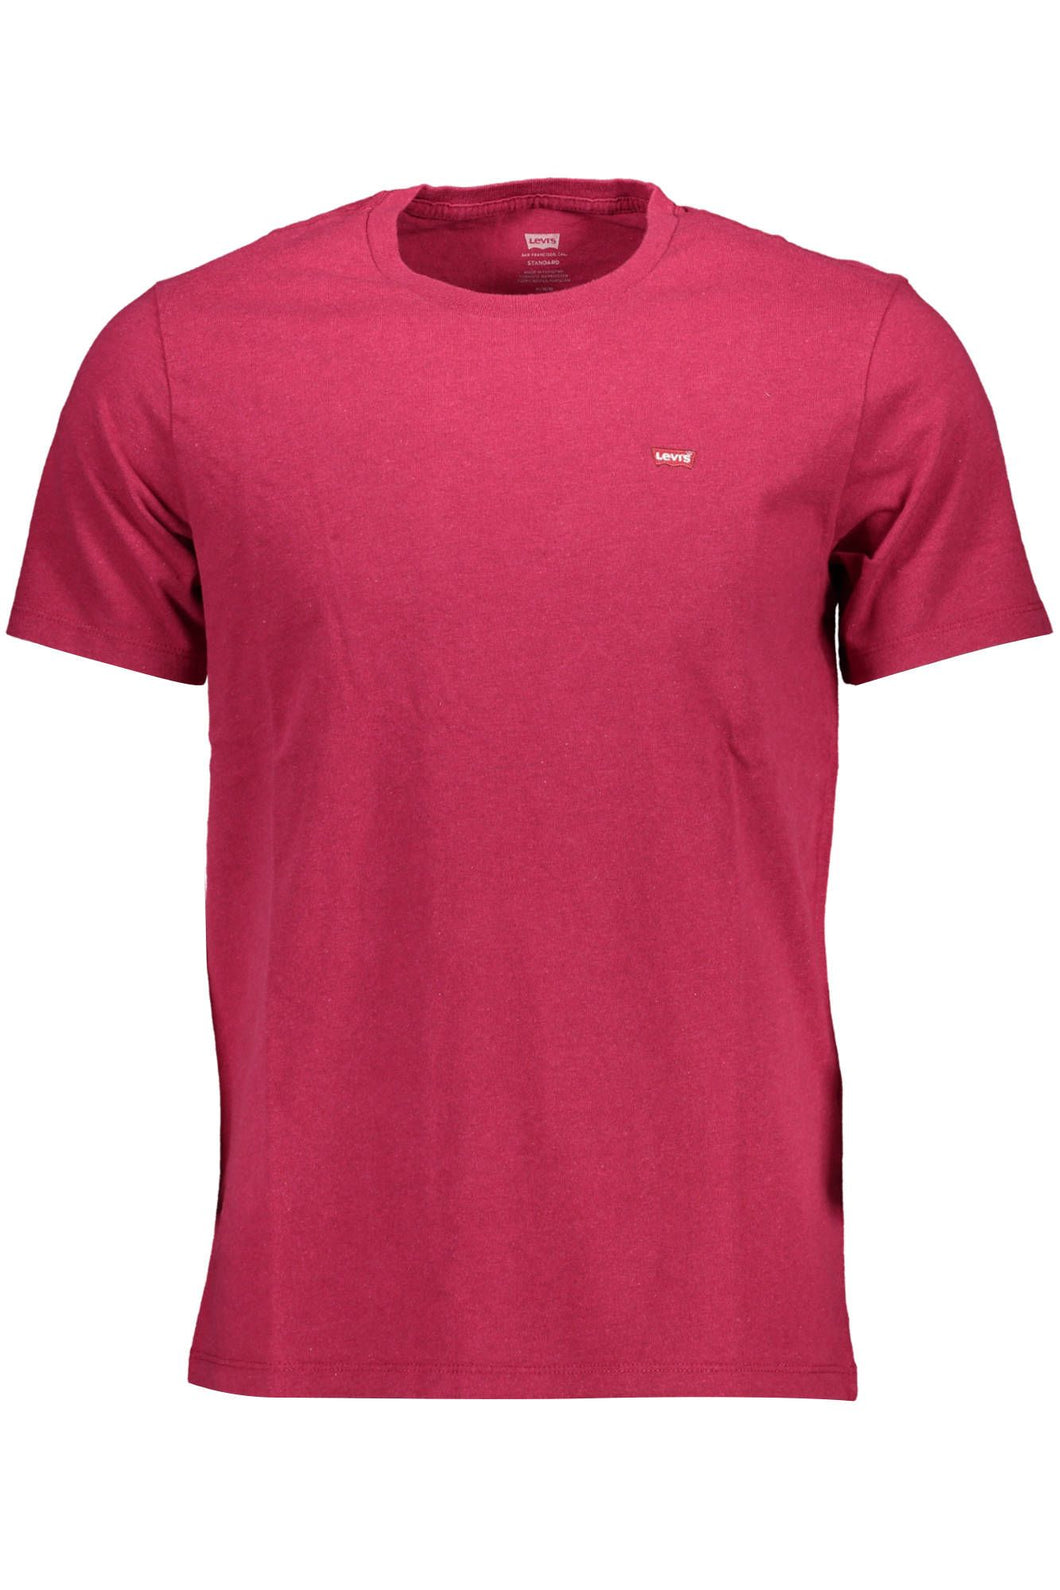 Levi's Red Cotton T-Shirt